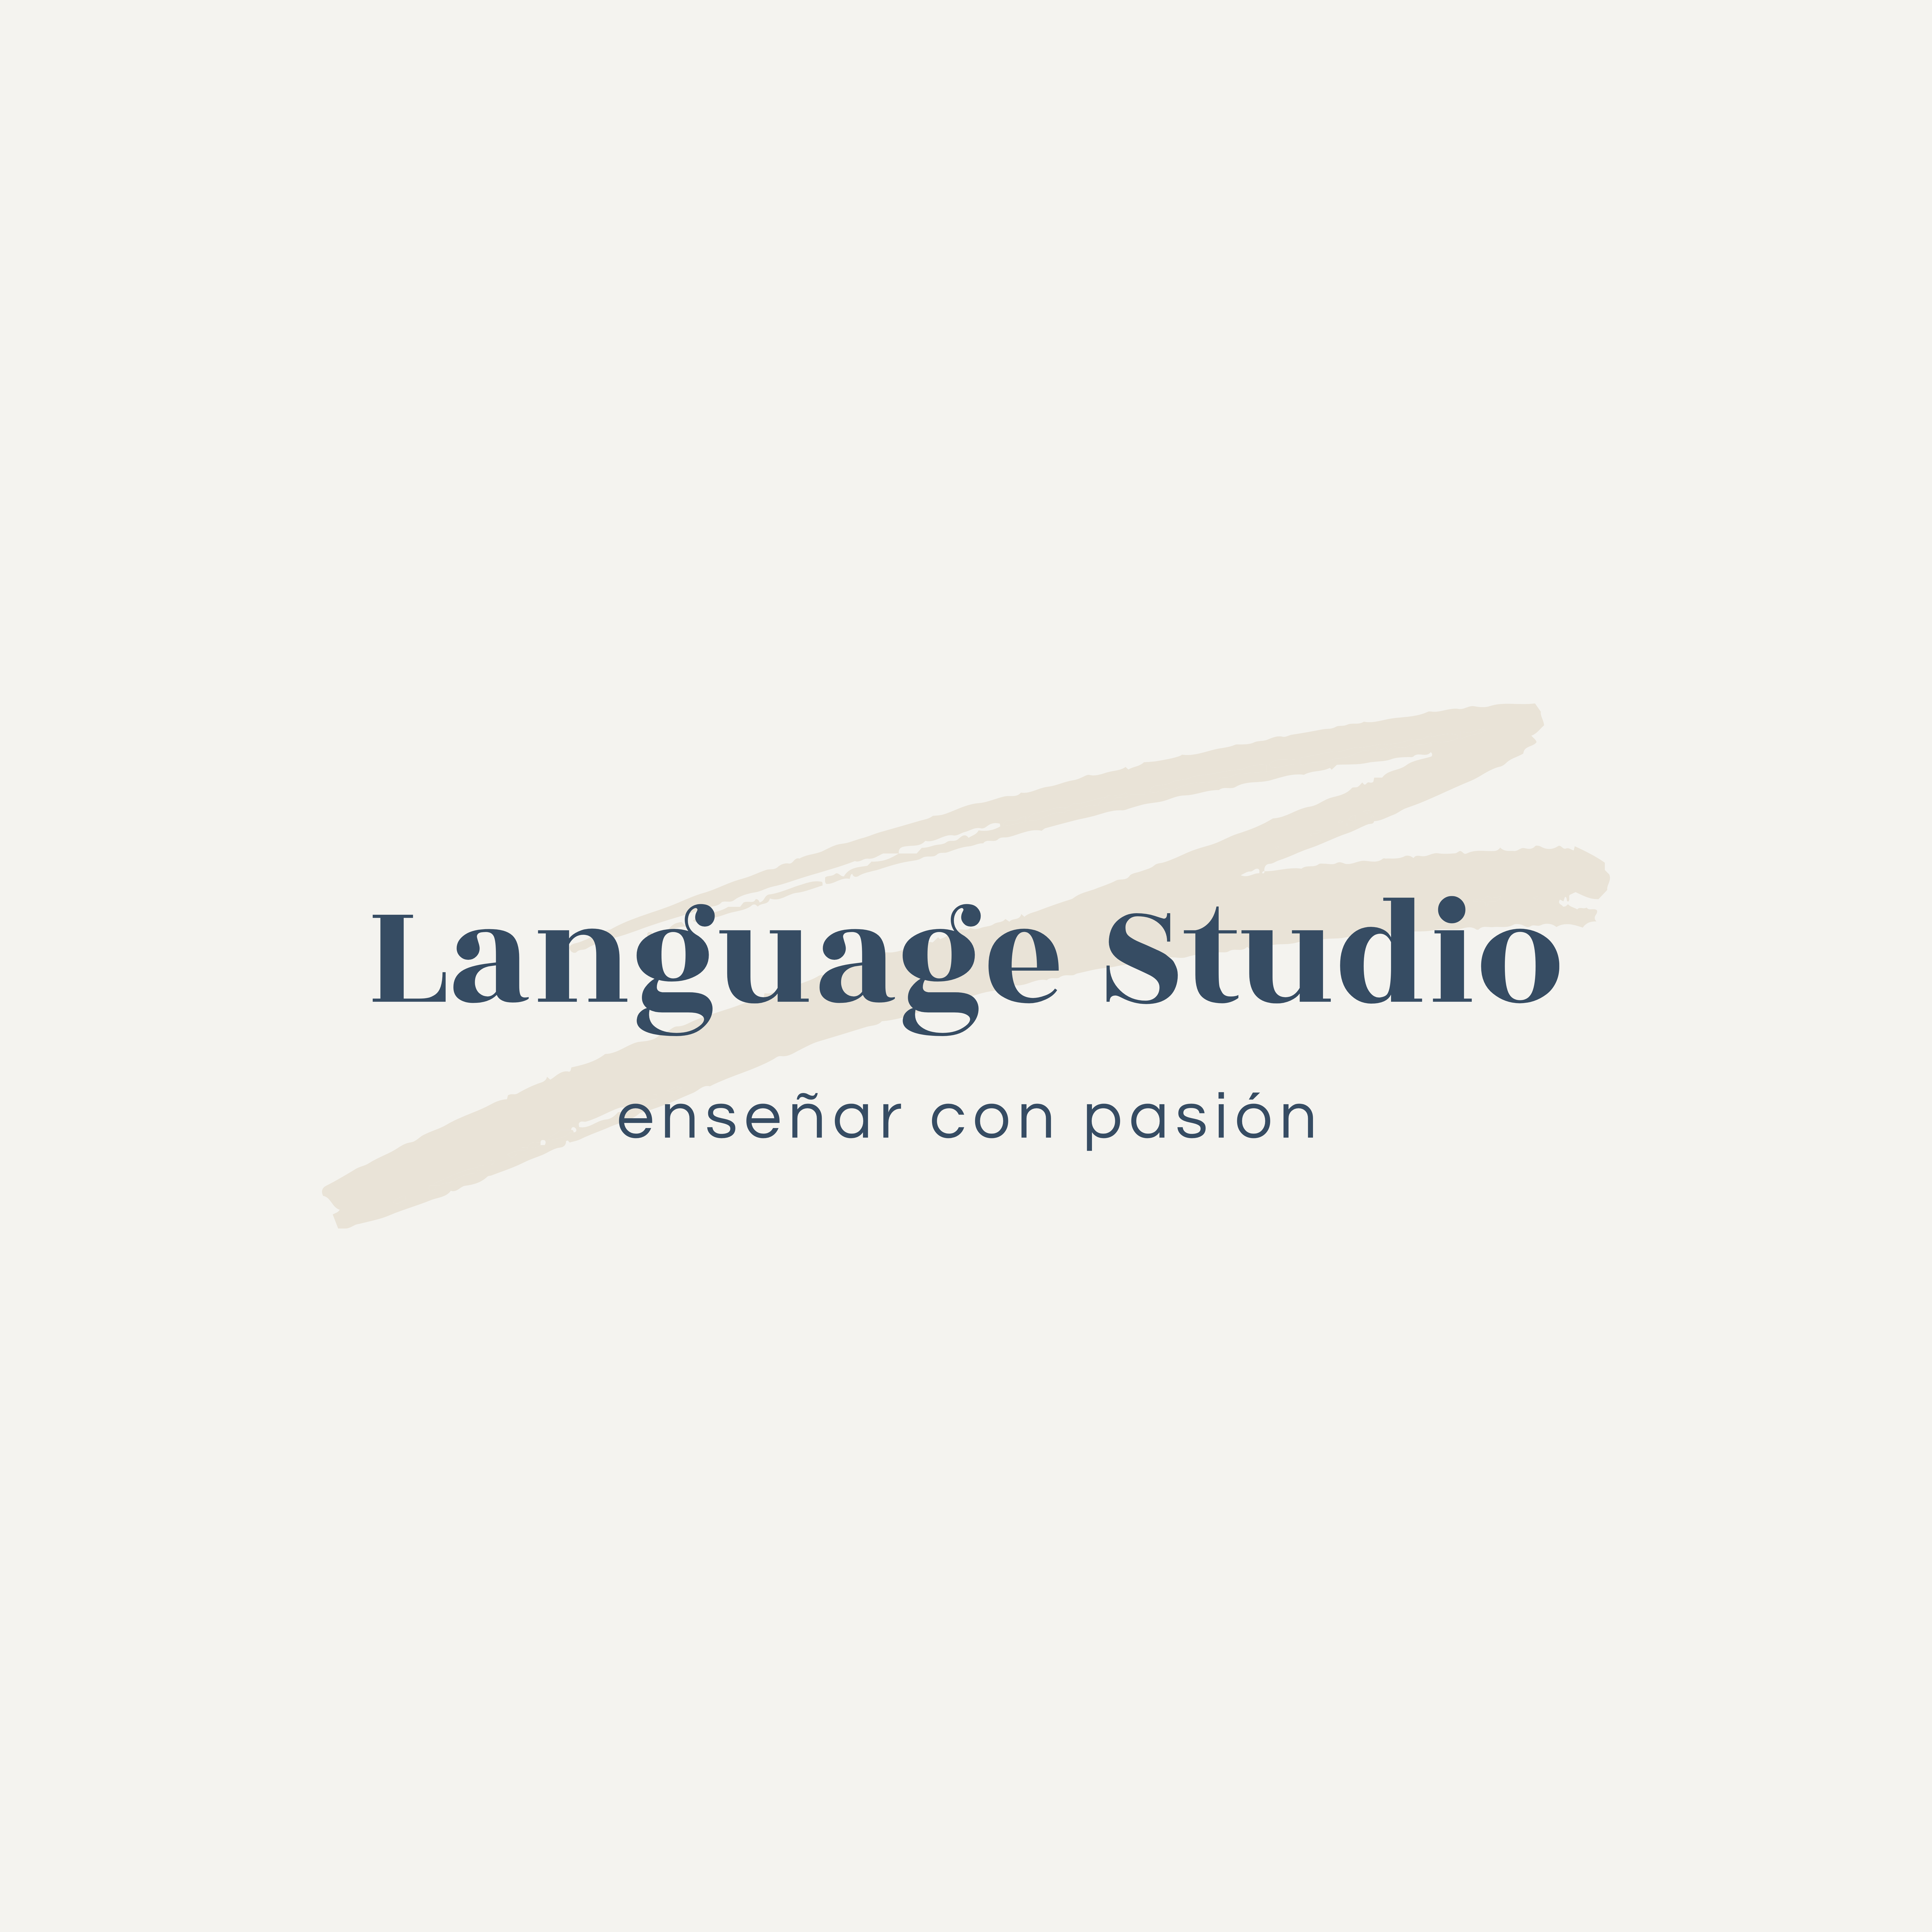 Language Studio Logo